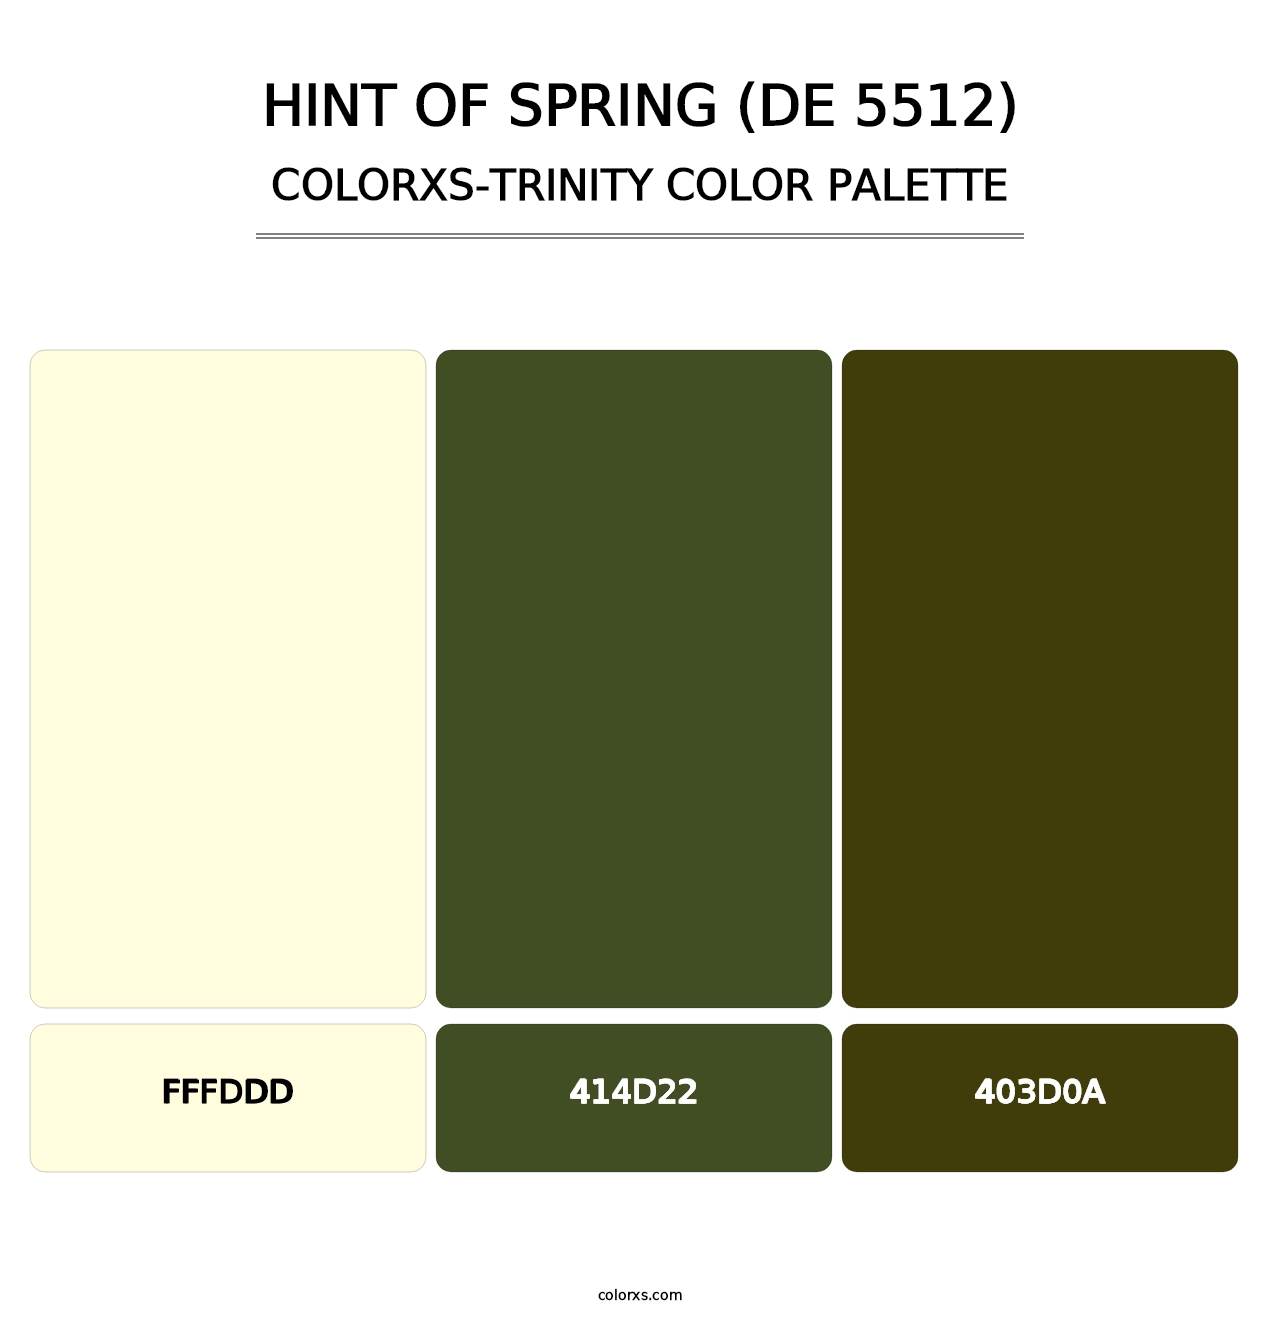 Hint of Spring (DE 5512) - Colorxs Trinity Palette